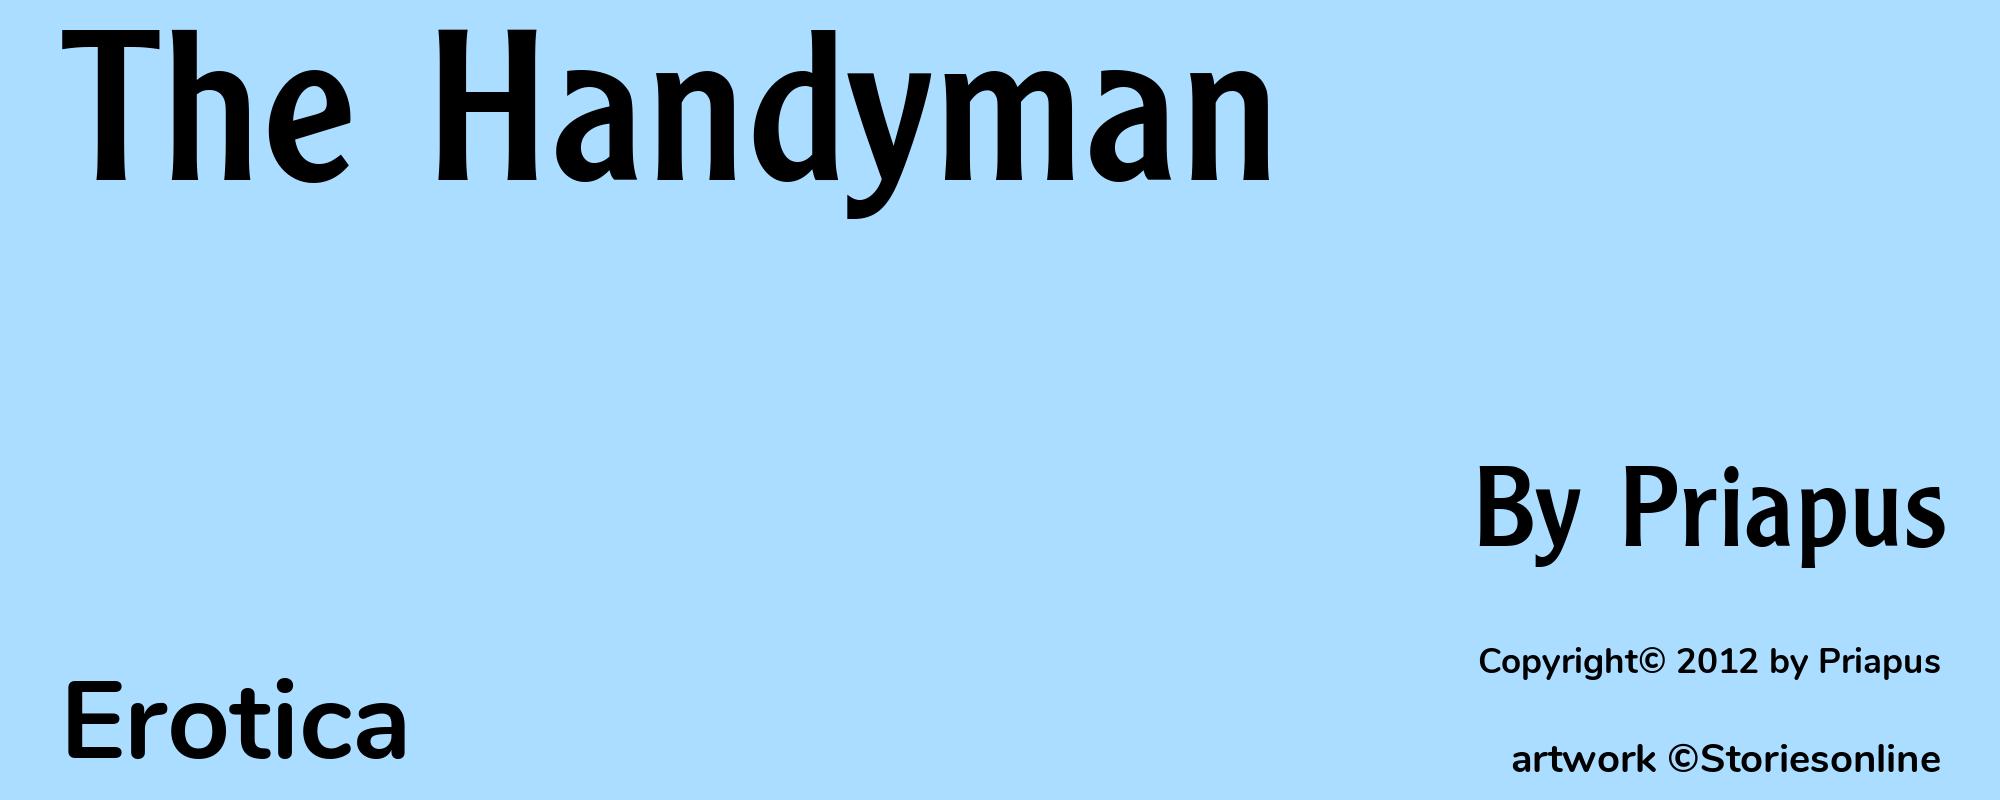 The Handyman - Cover